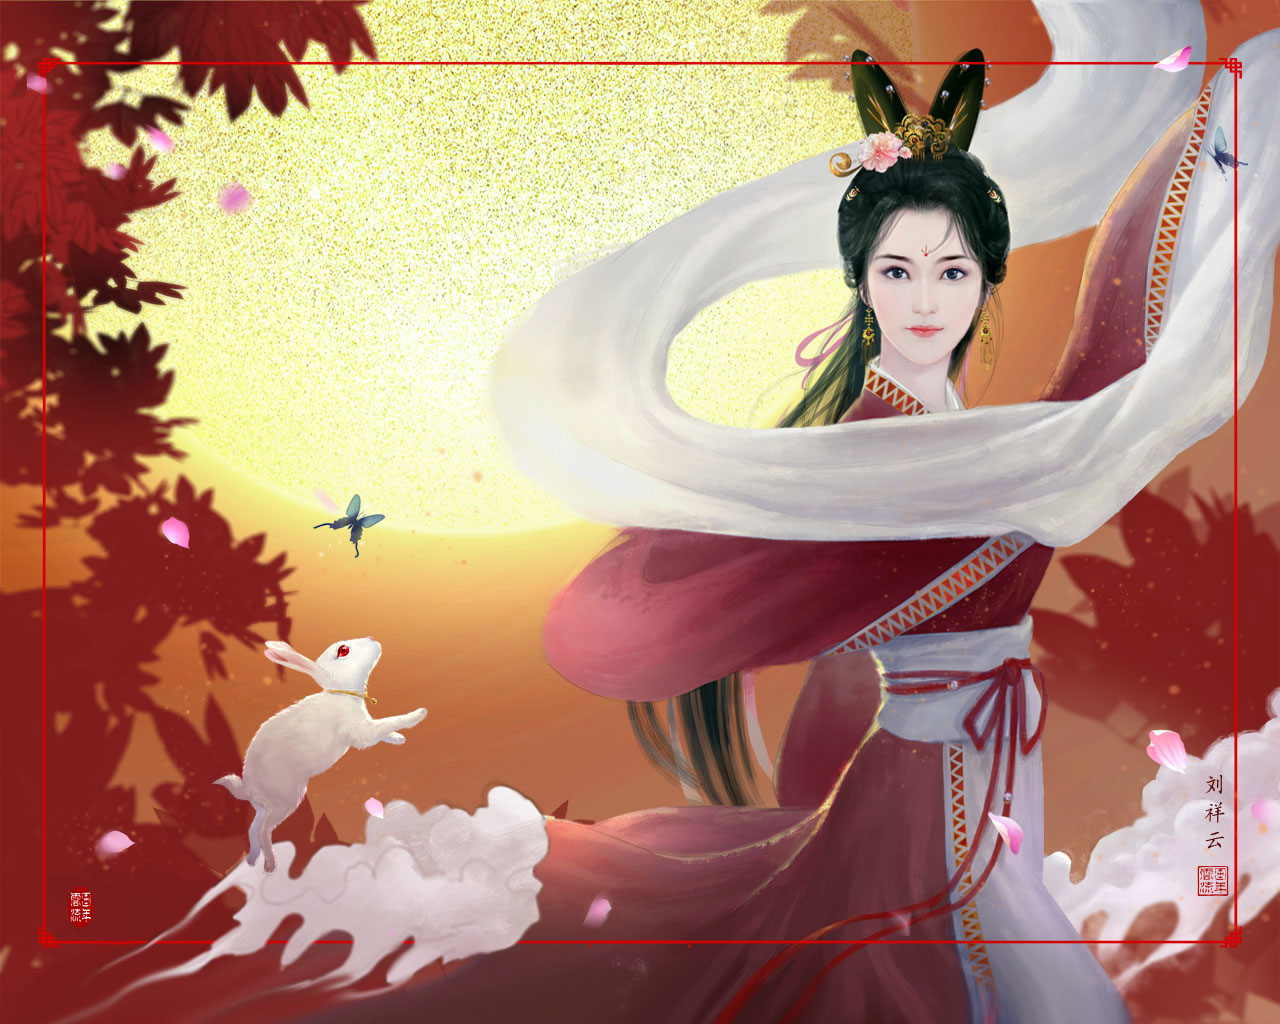 Digital Art Original Characters Fantasy Girl HiLiuyun 1280x1024